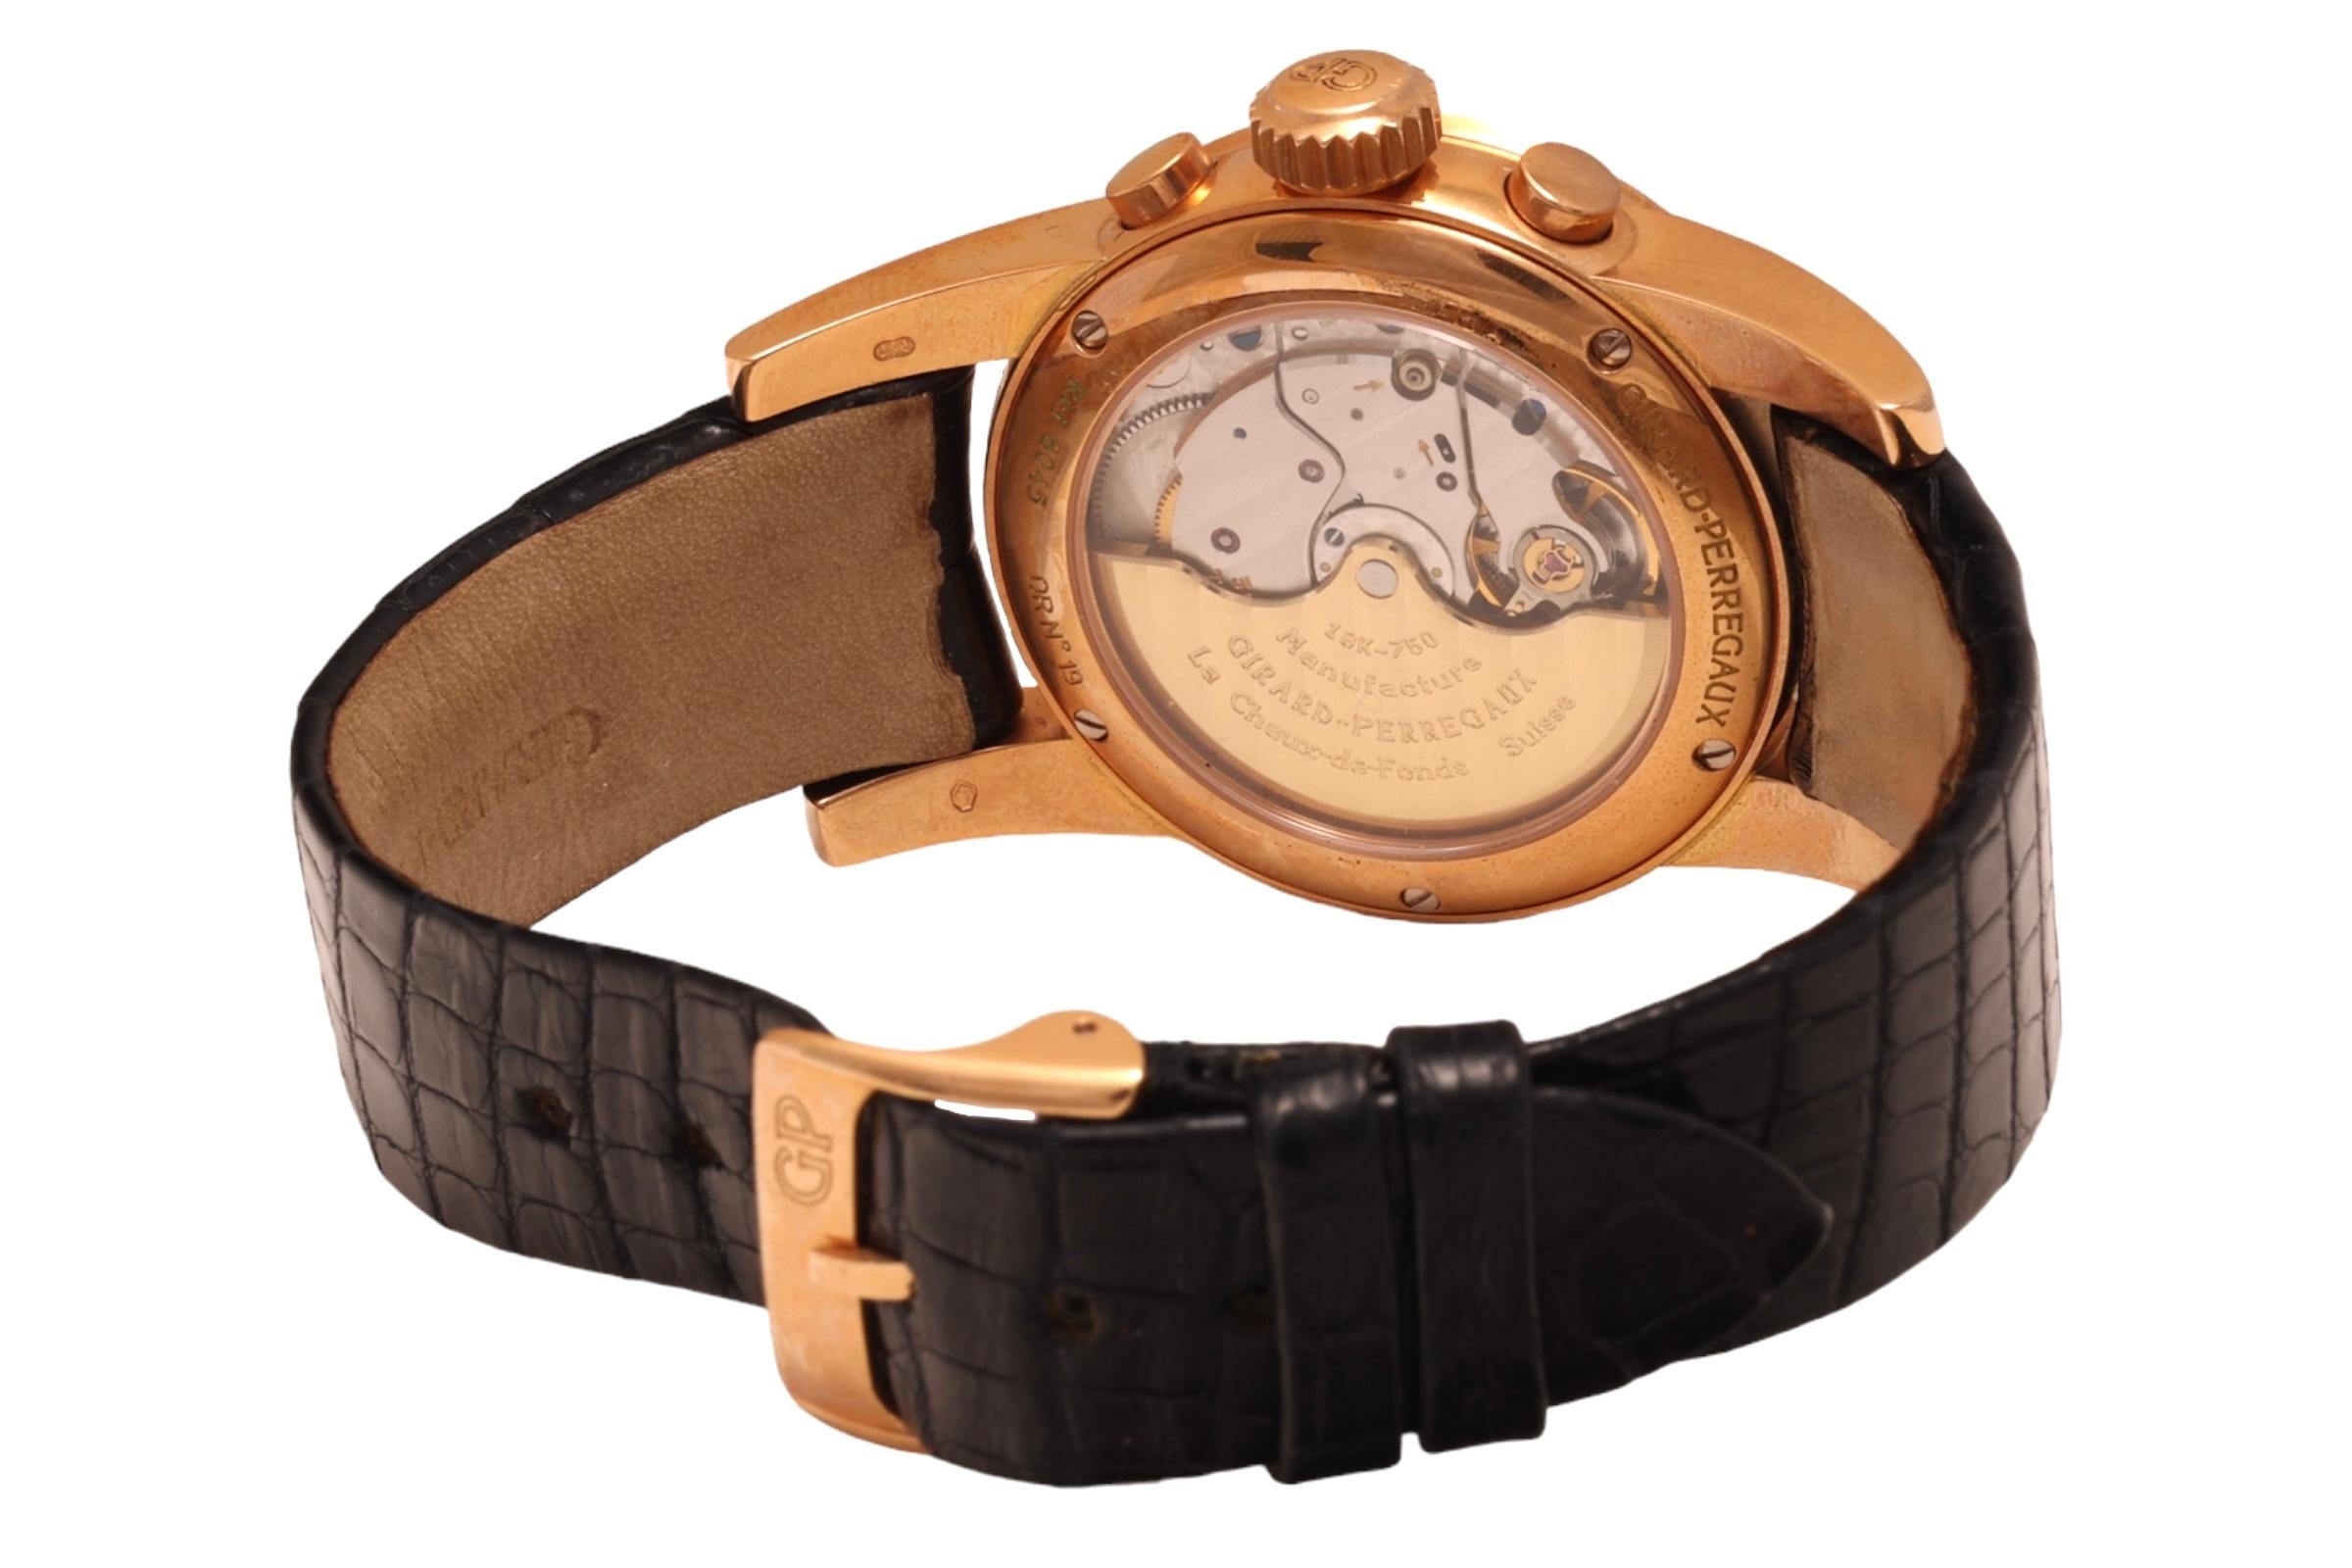 18 Kt Girard Perregaux Chronograph Wrist Watch For Sale 5